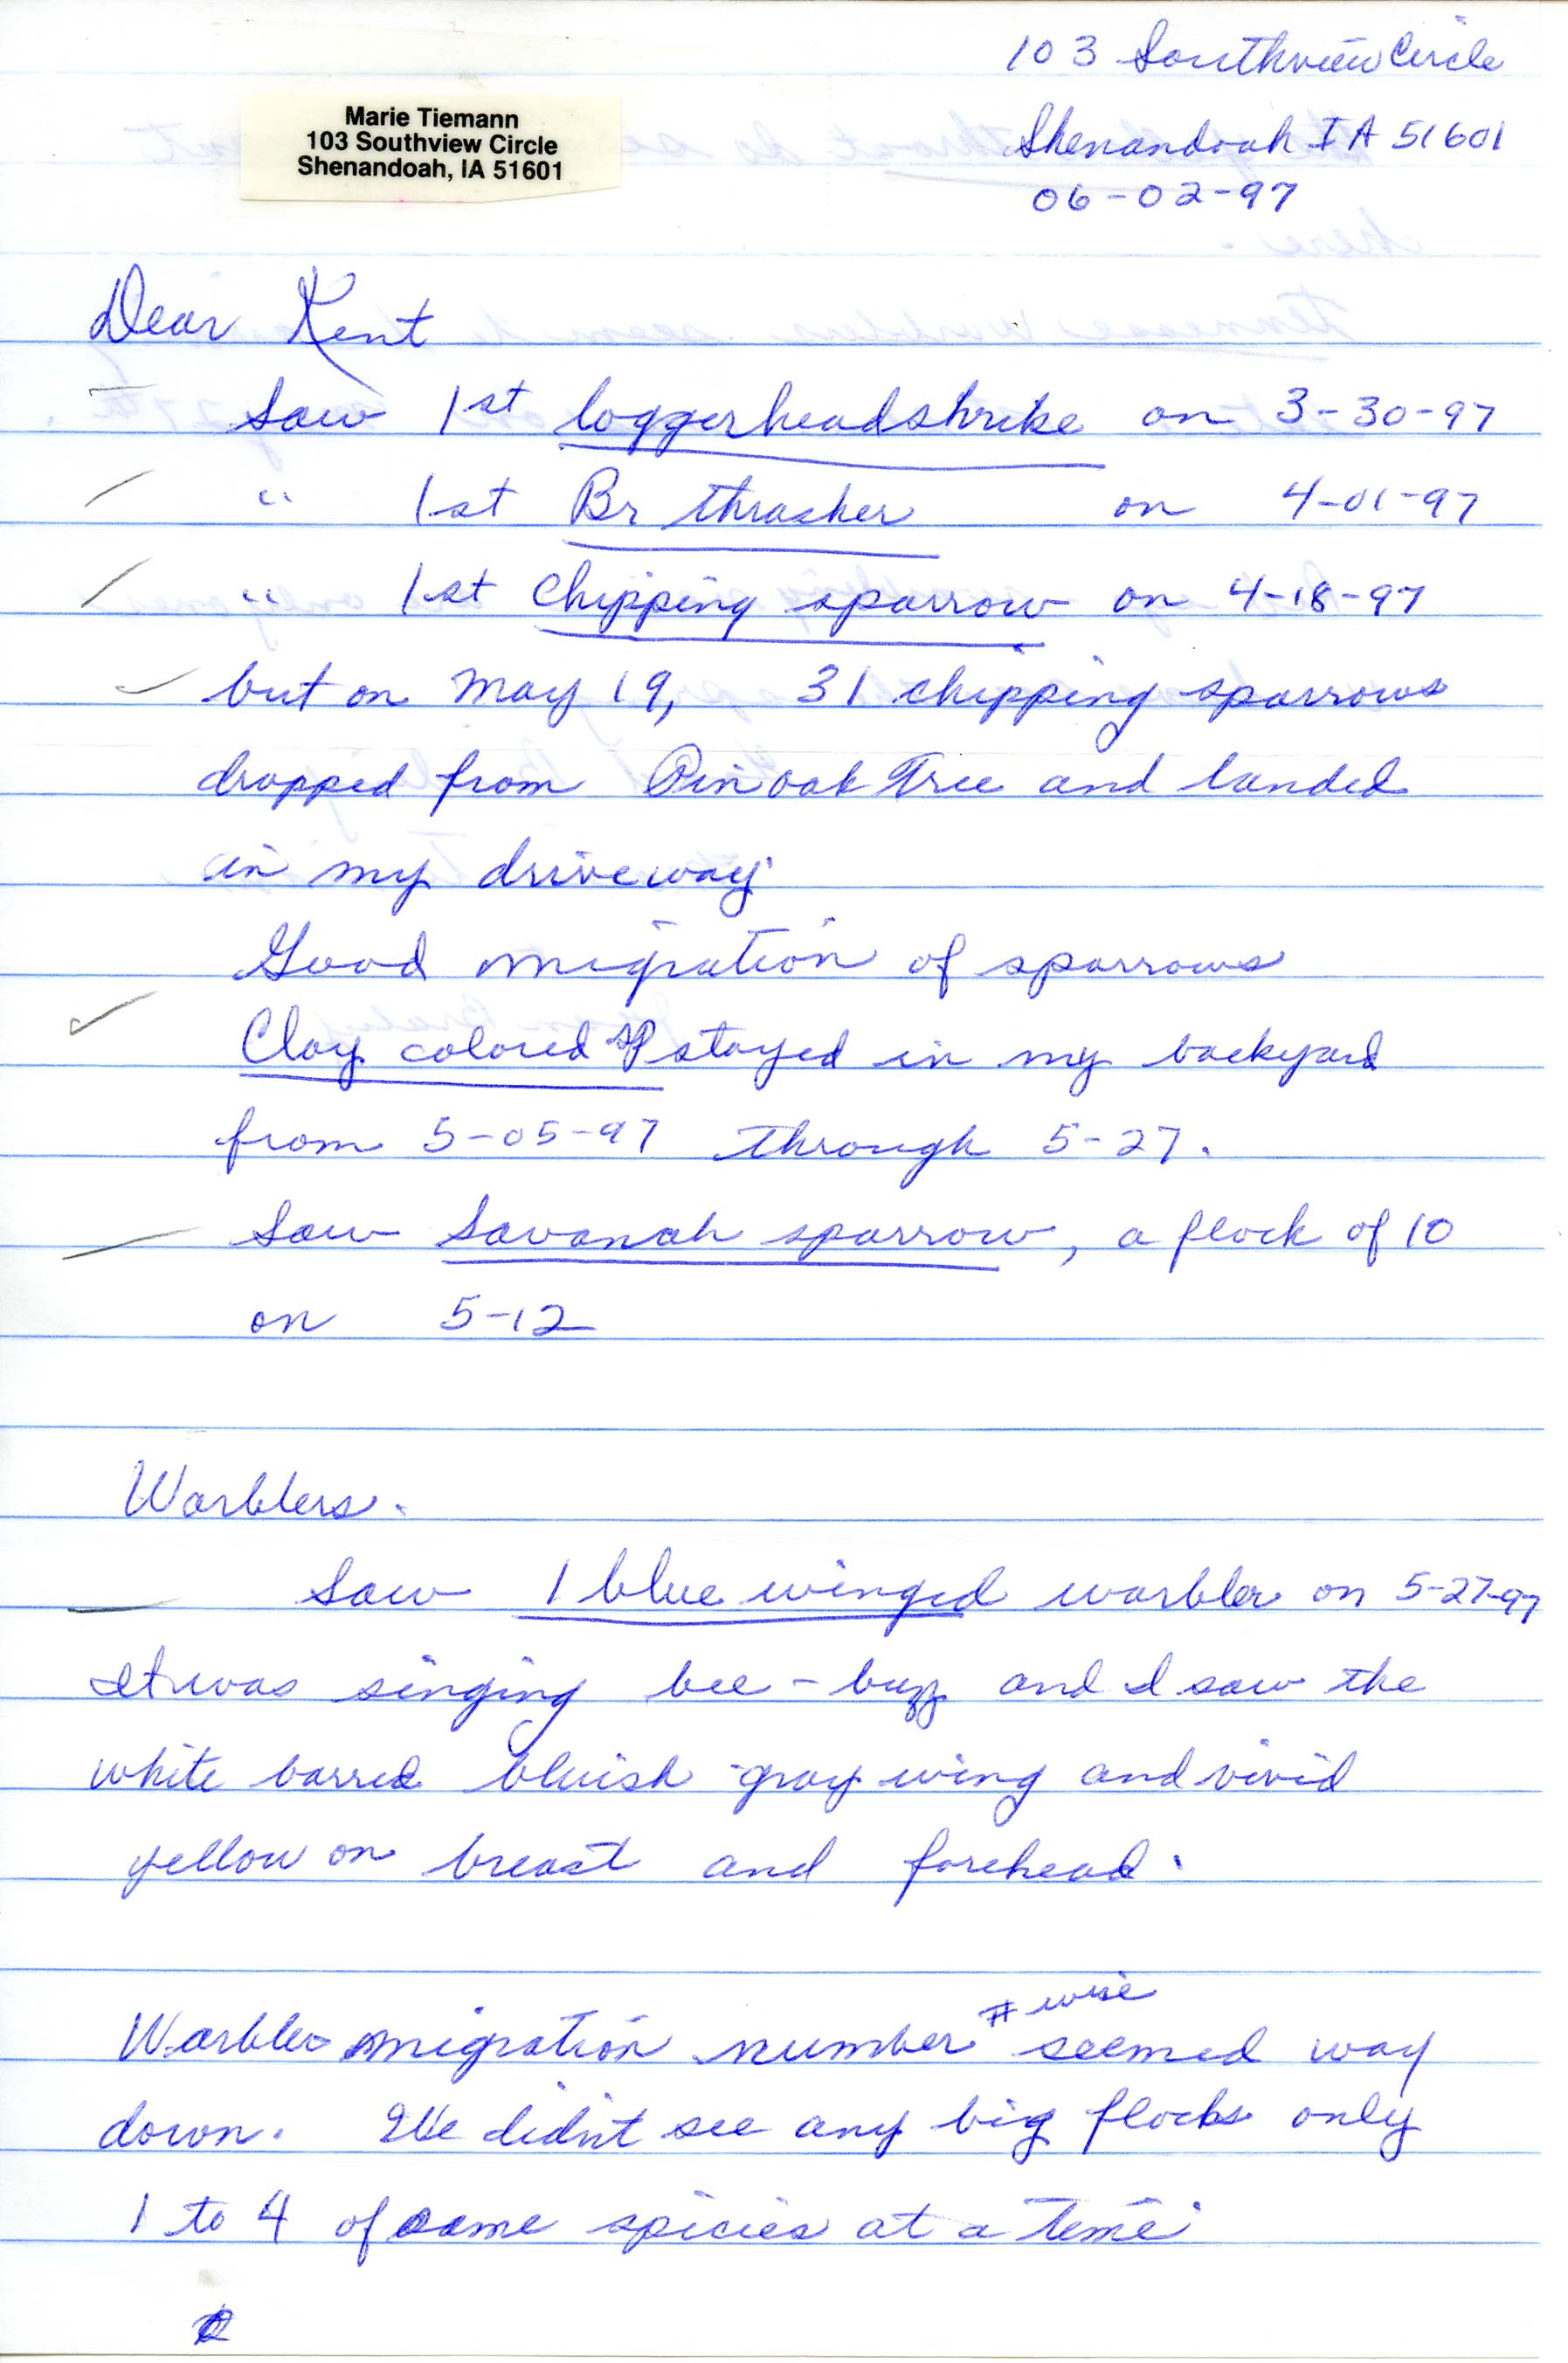 Marie E. Spears Tiemann and Jean B. Braley letter to Thomas H. Kent regarding bird sightings, June 2, 1997